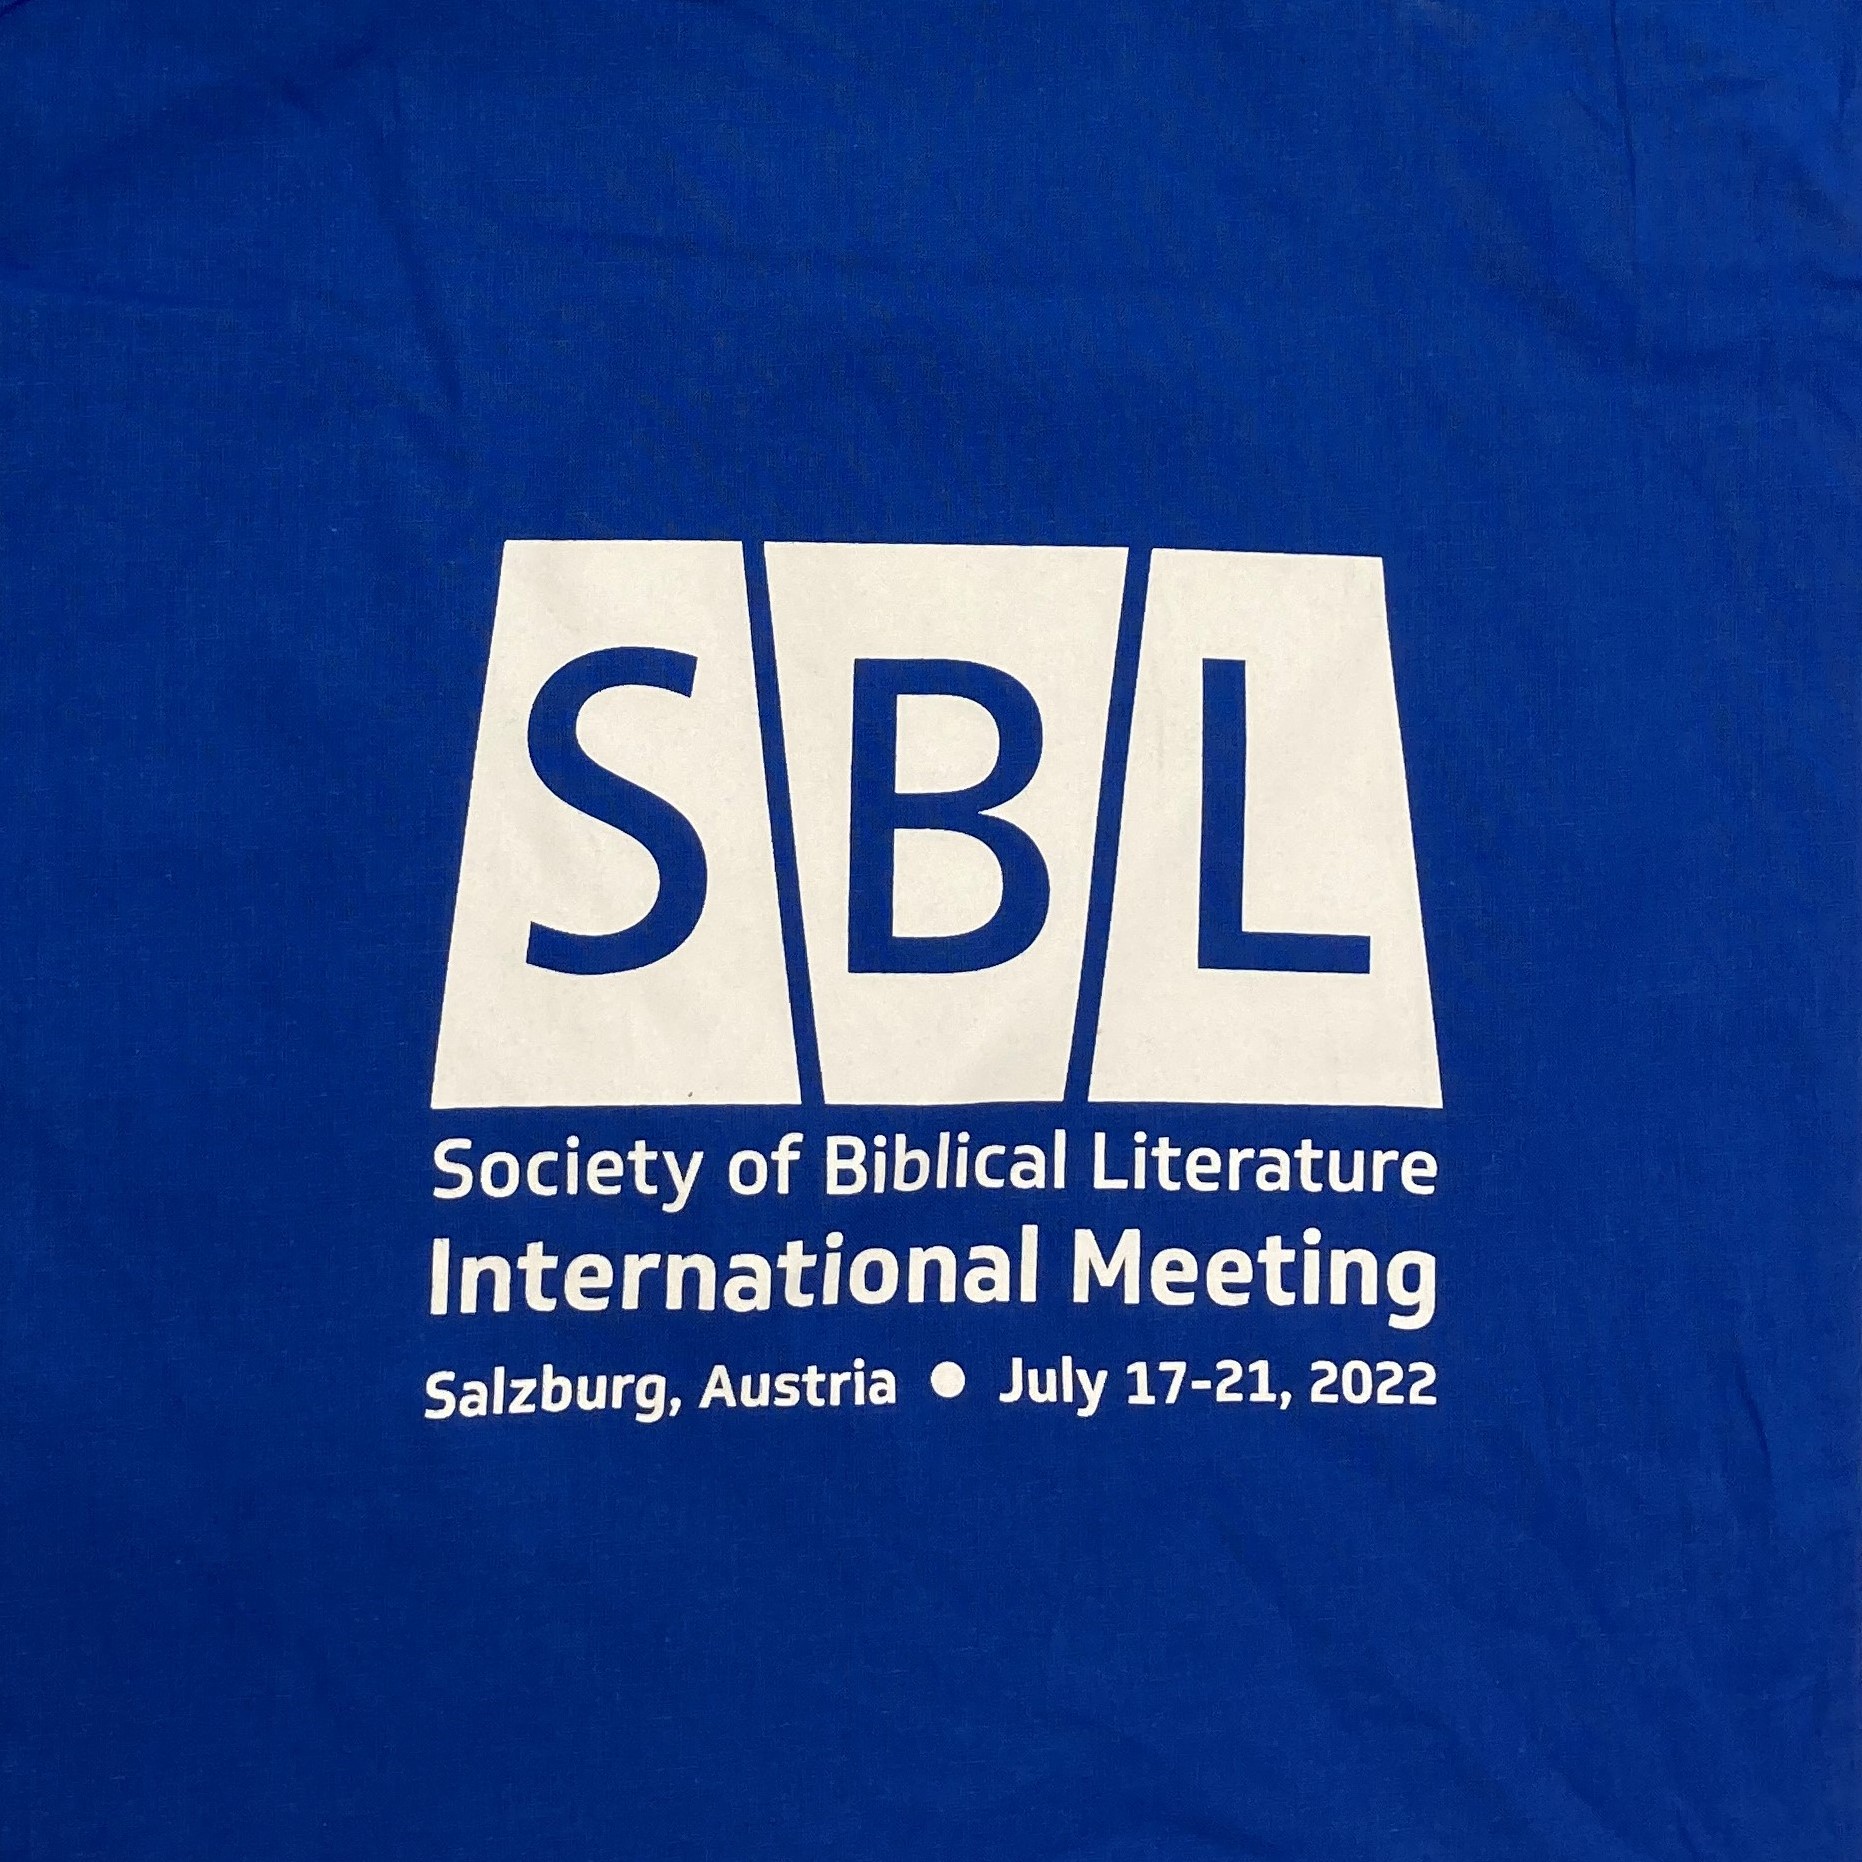 SBL International Meeting